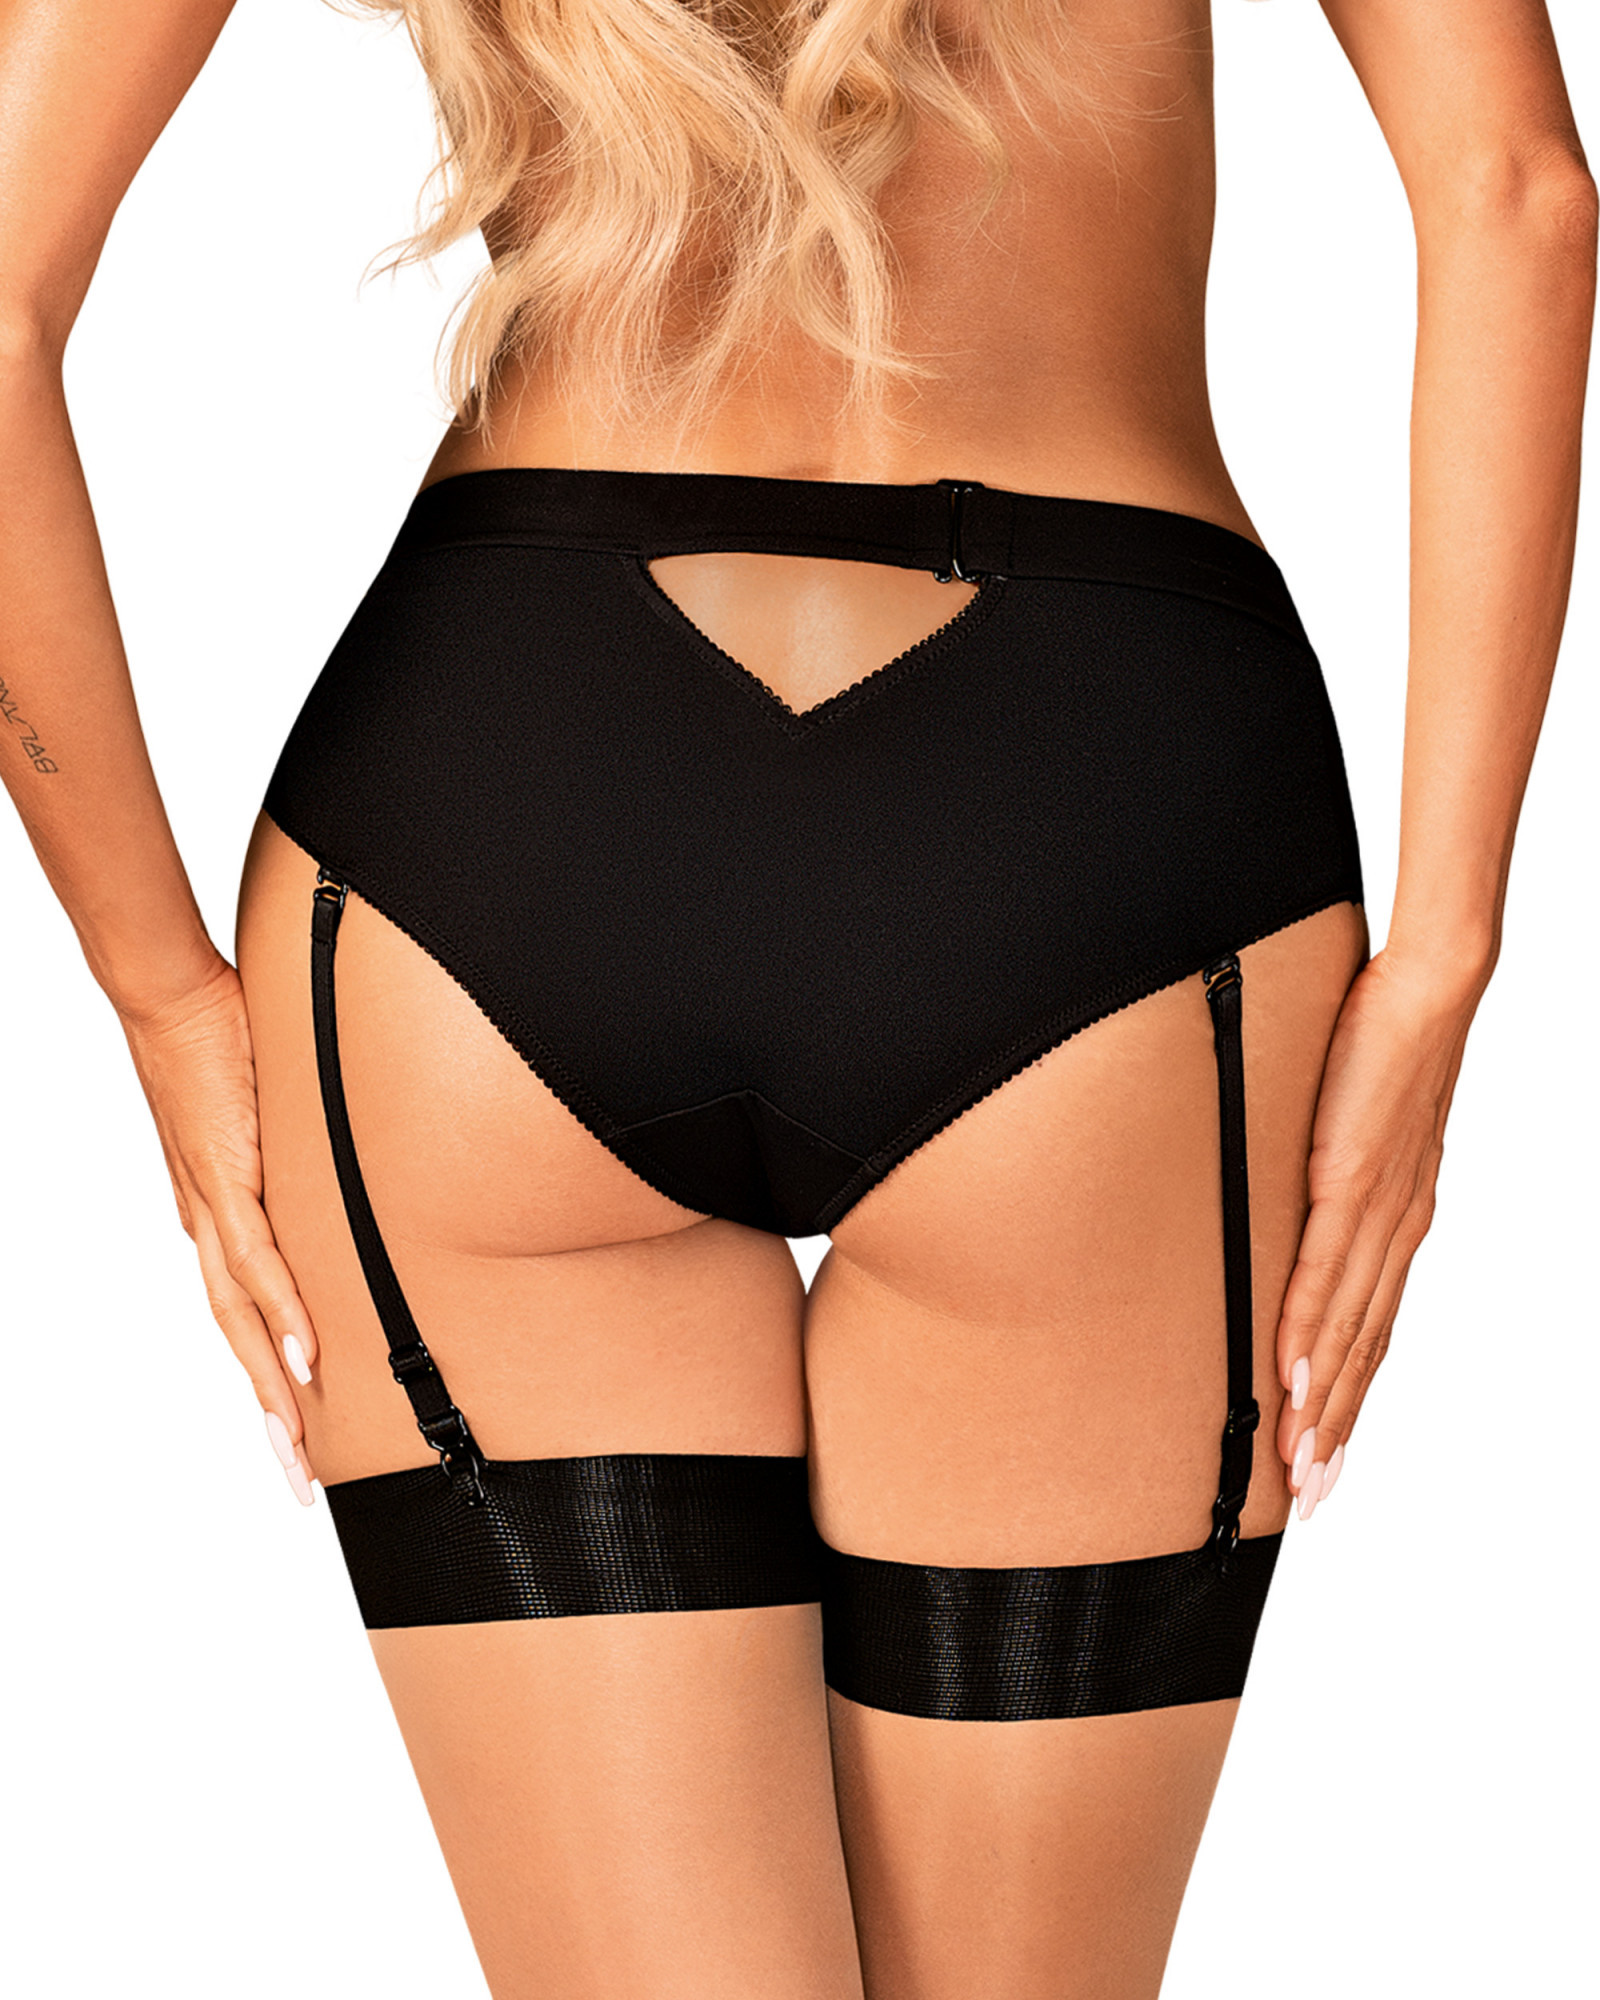 Podvazkové kalhotky Editya garter panties - Obsessive černá XS/S